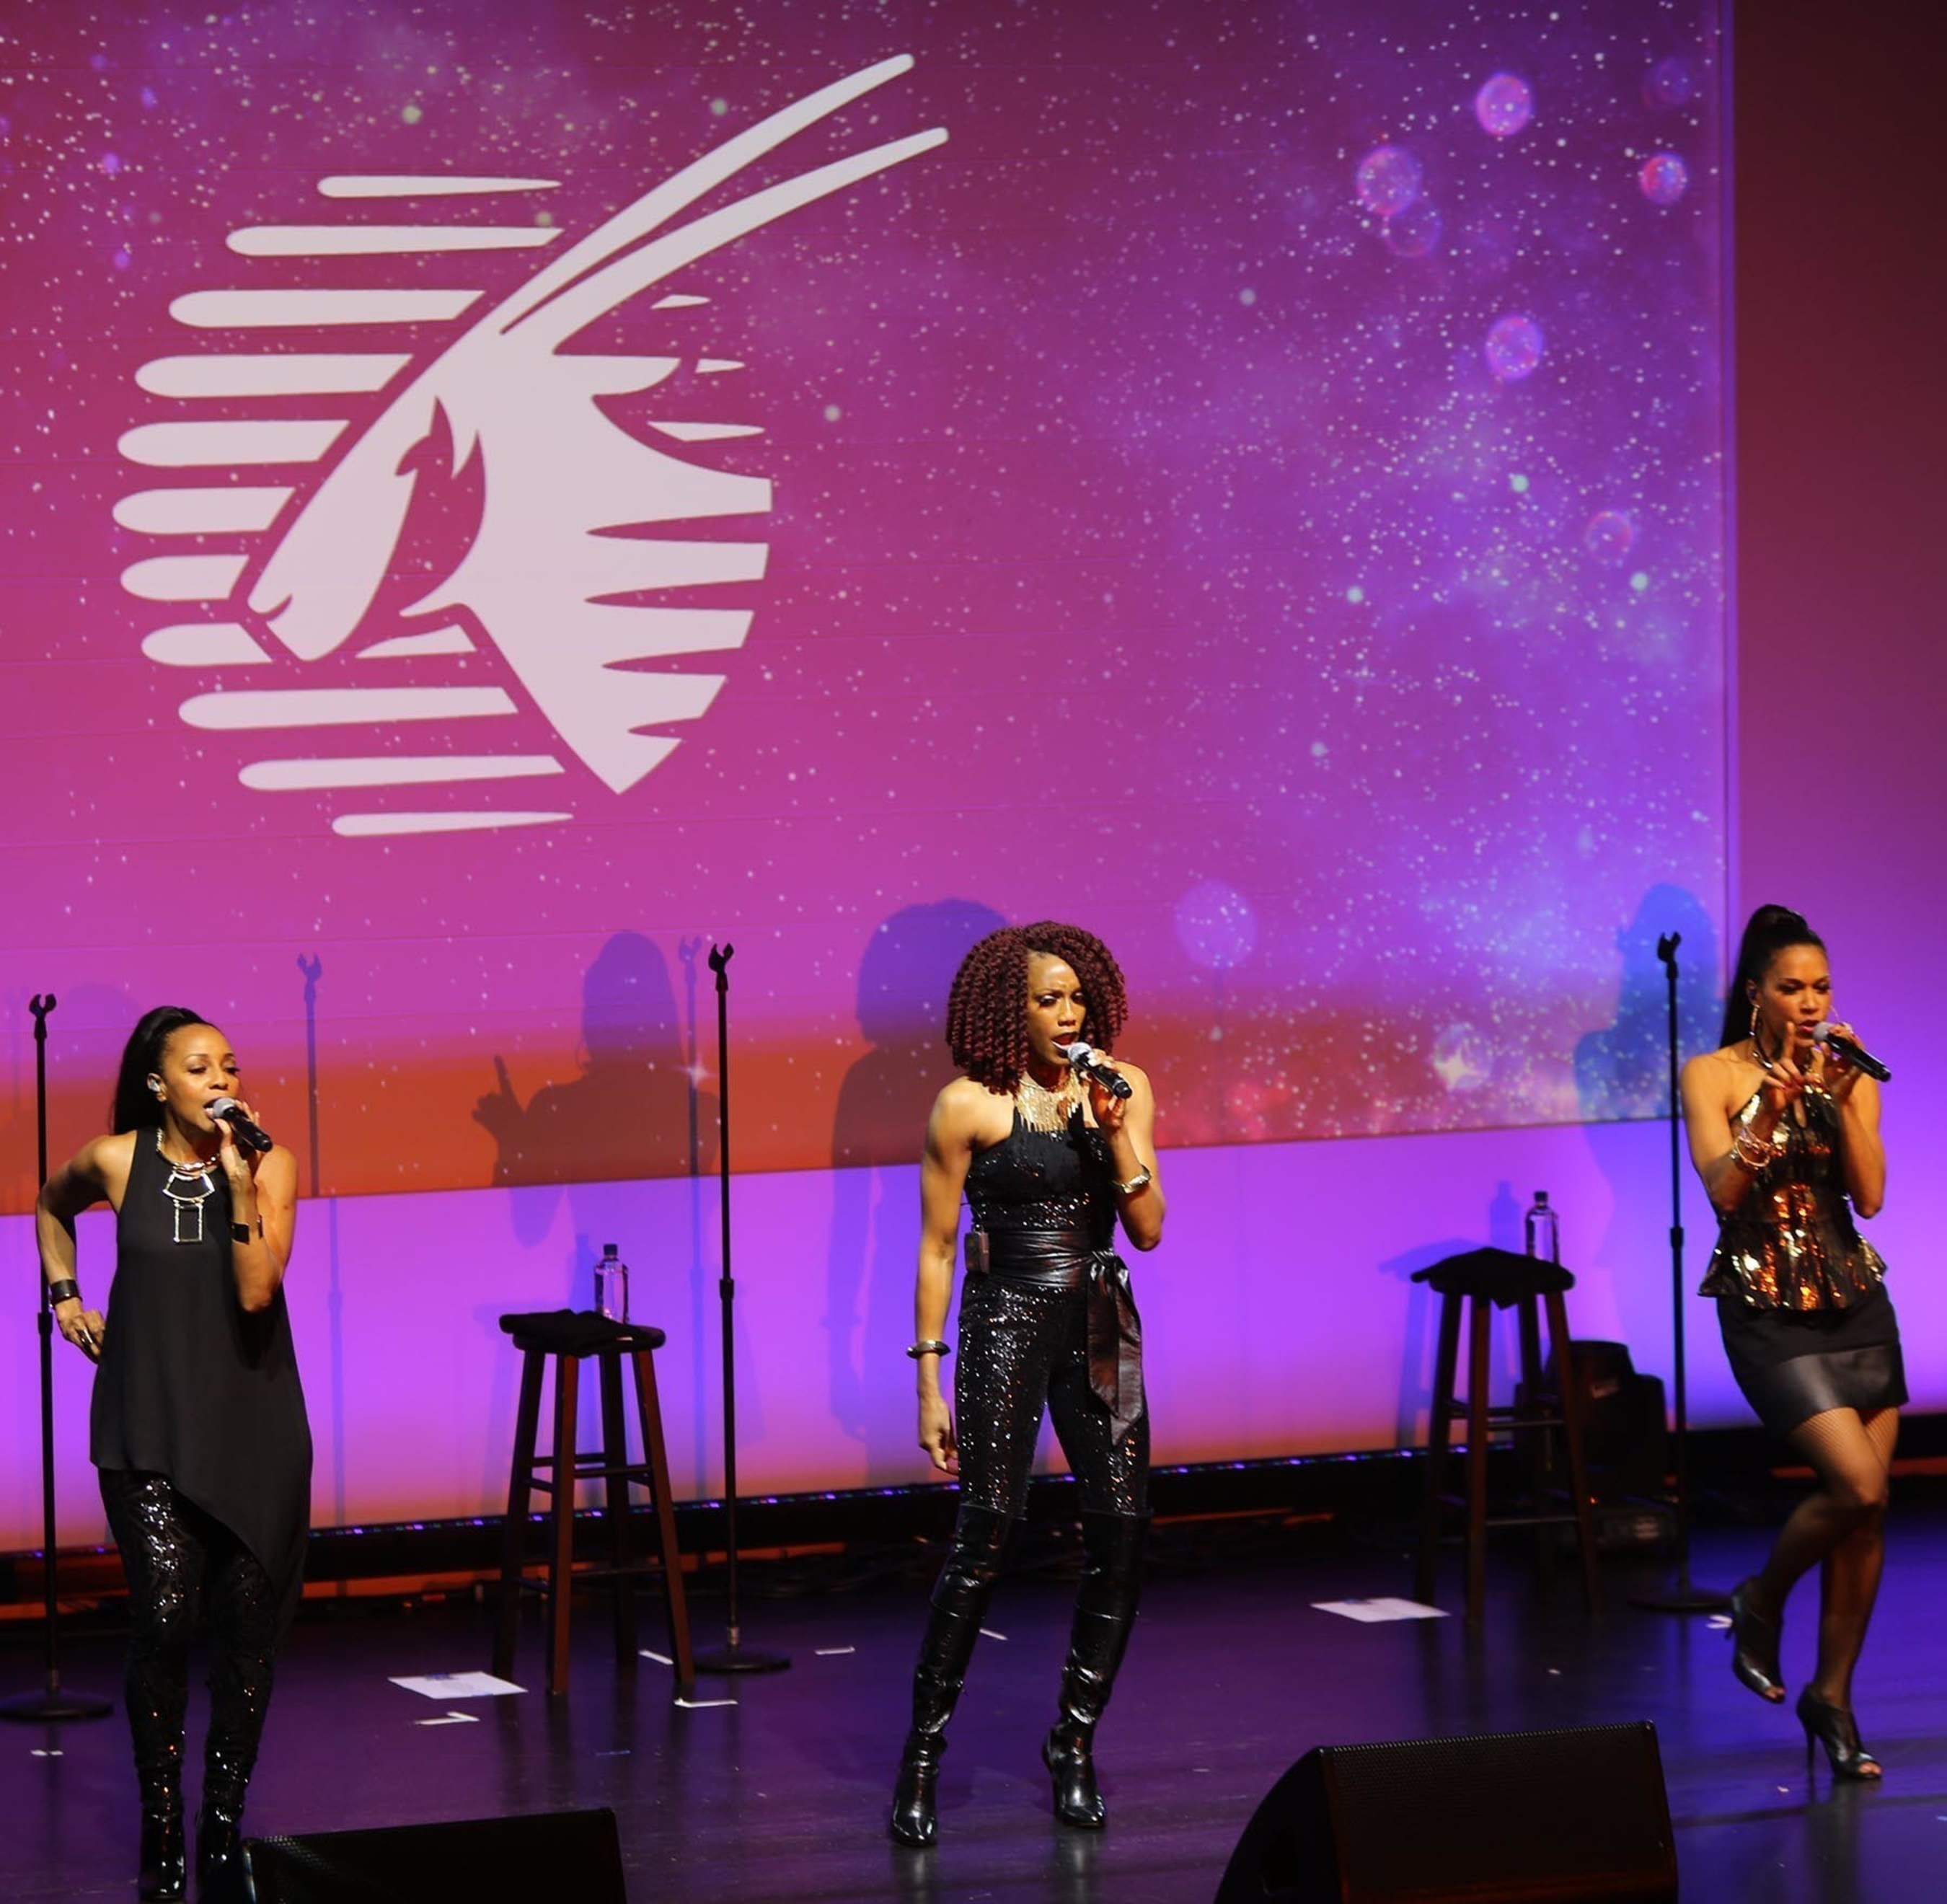 Qatar Airways' gala event in Boston featured a stunning musical performance by En Vogue